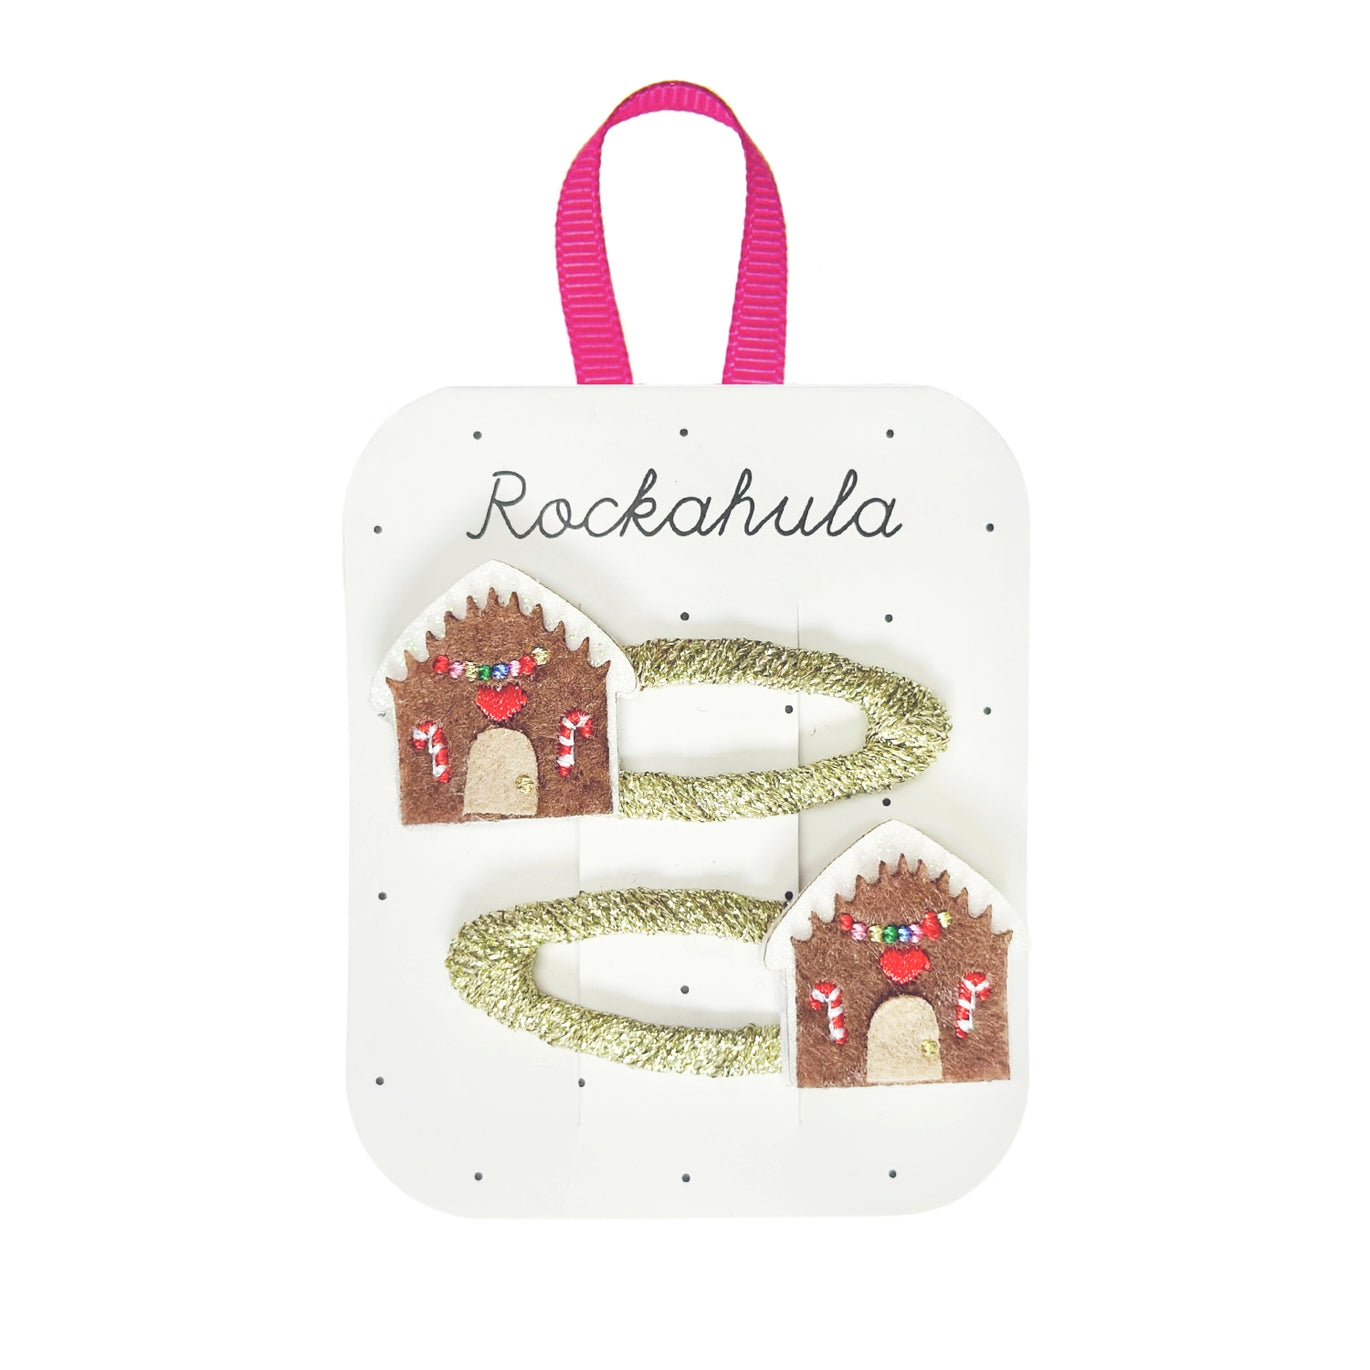 Rockahula hair clips